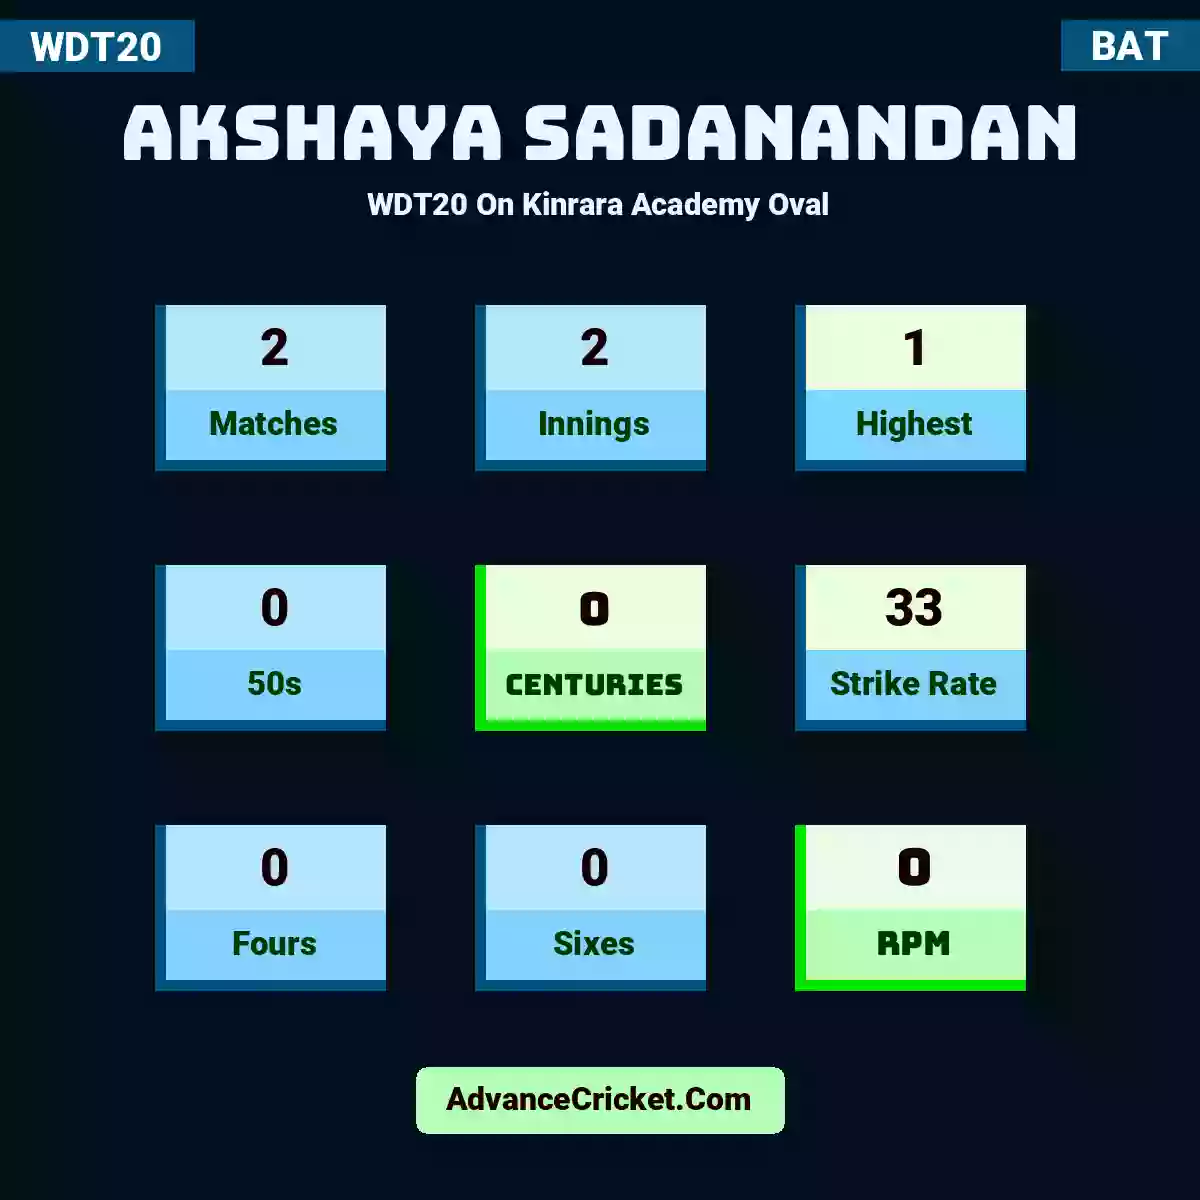 Akshaya Sadanandan WDT20  On Kinrara Academy Oval, Akshaya Sadanandan played 2 matches, scored 1 runs as highest, 0 half-centuries, and 0 centuries, with a strike rate of 33. A.Sadanandan hit 0 fours and 0 sixes, with an RPM of 0.